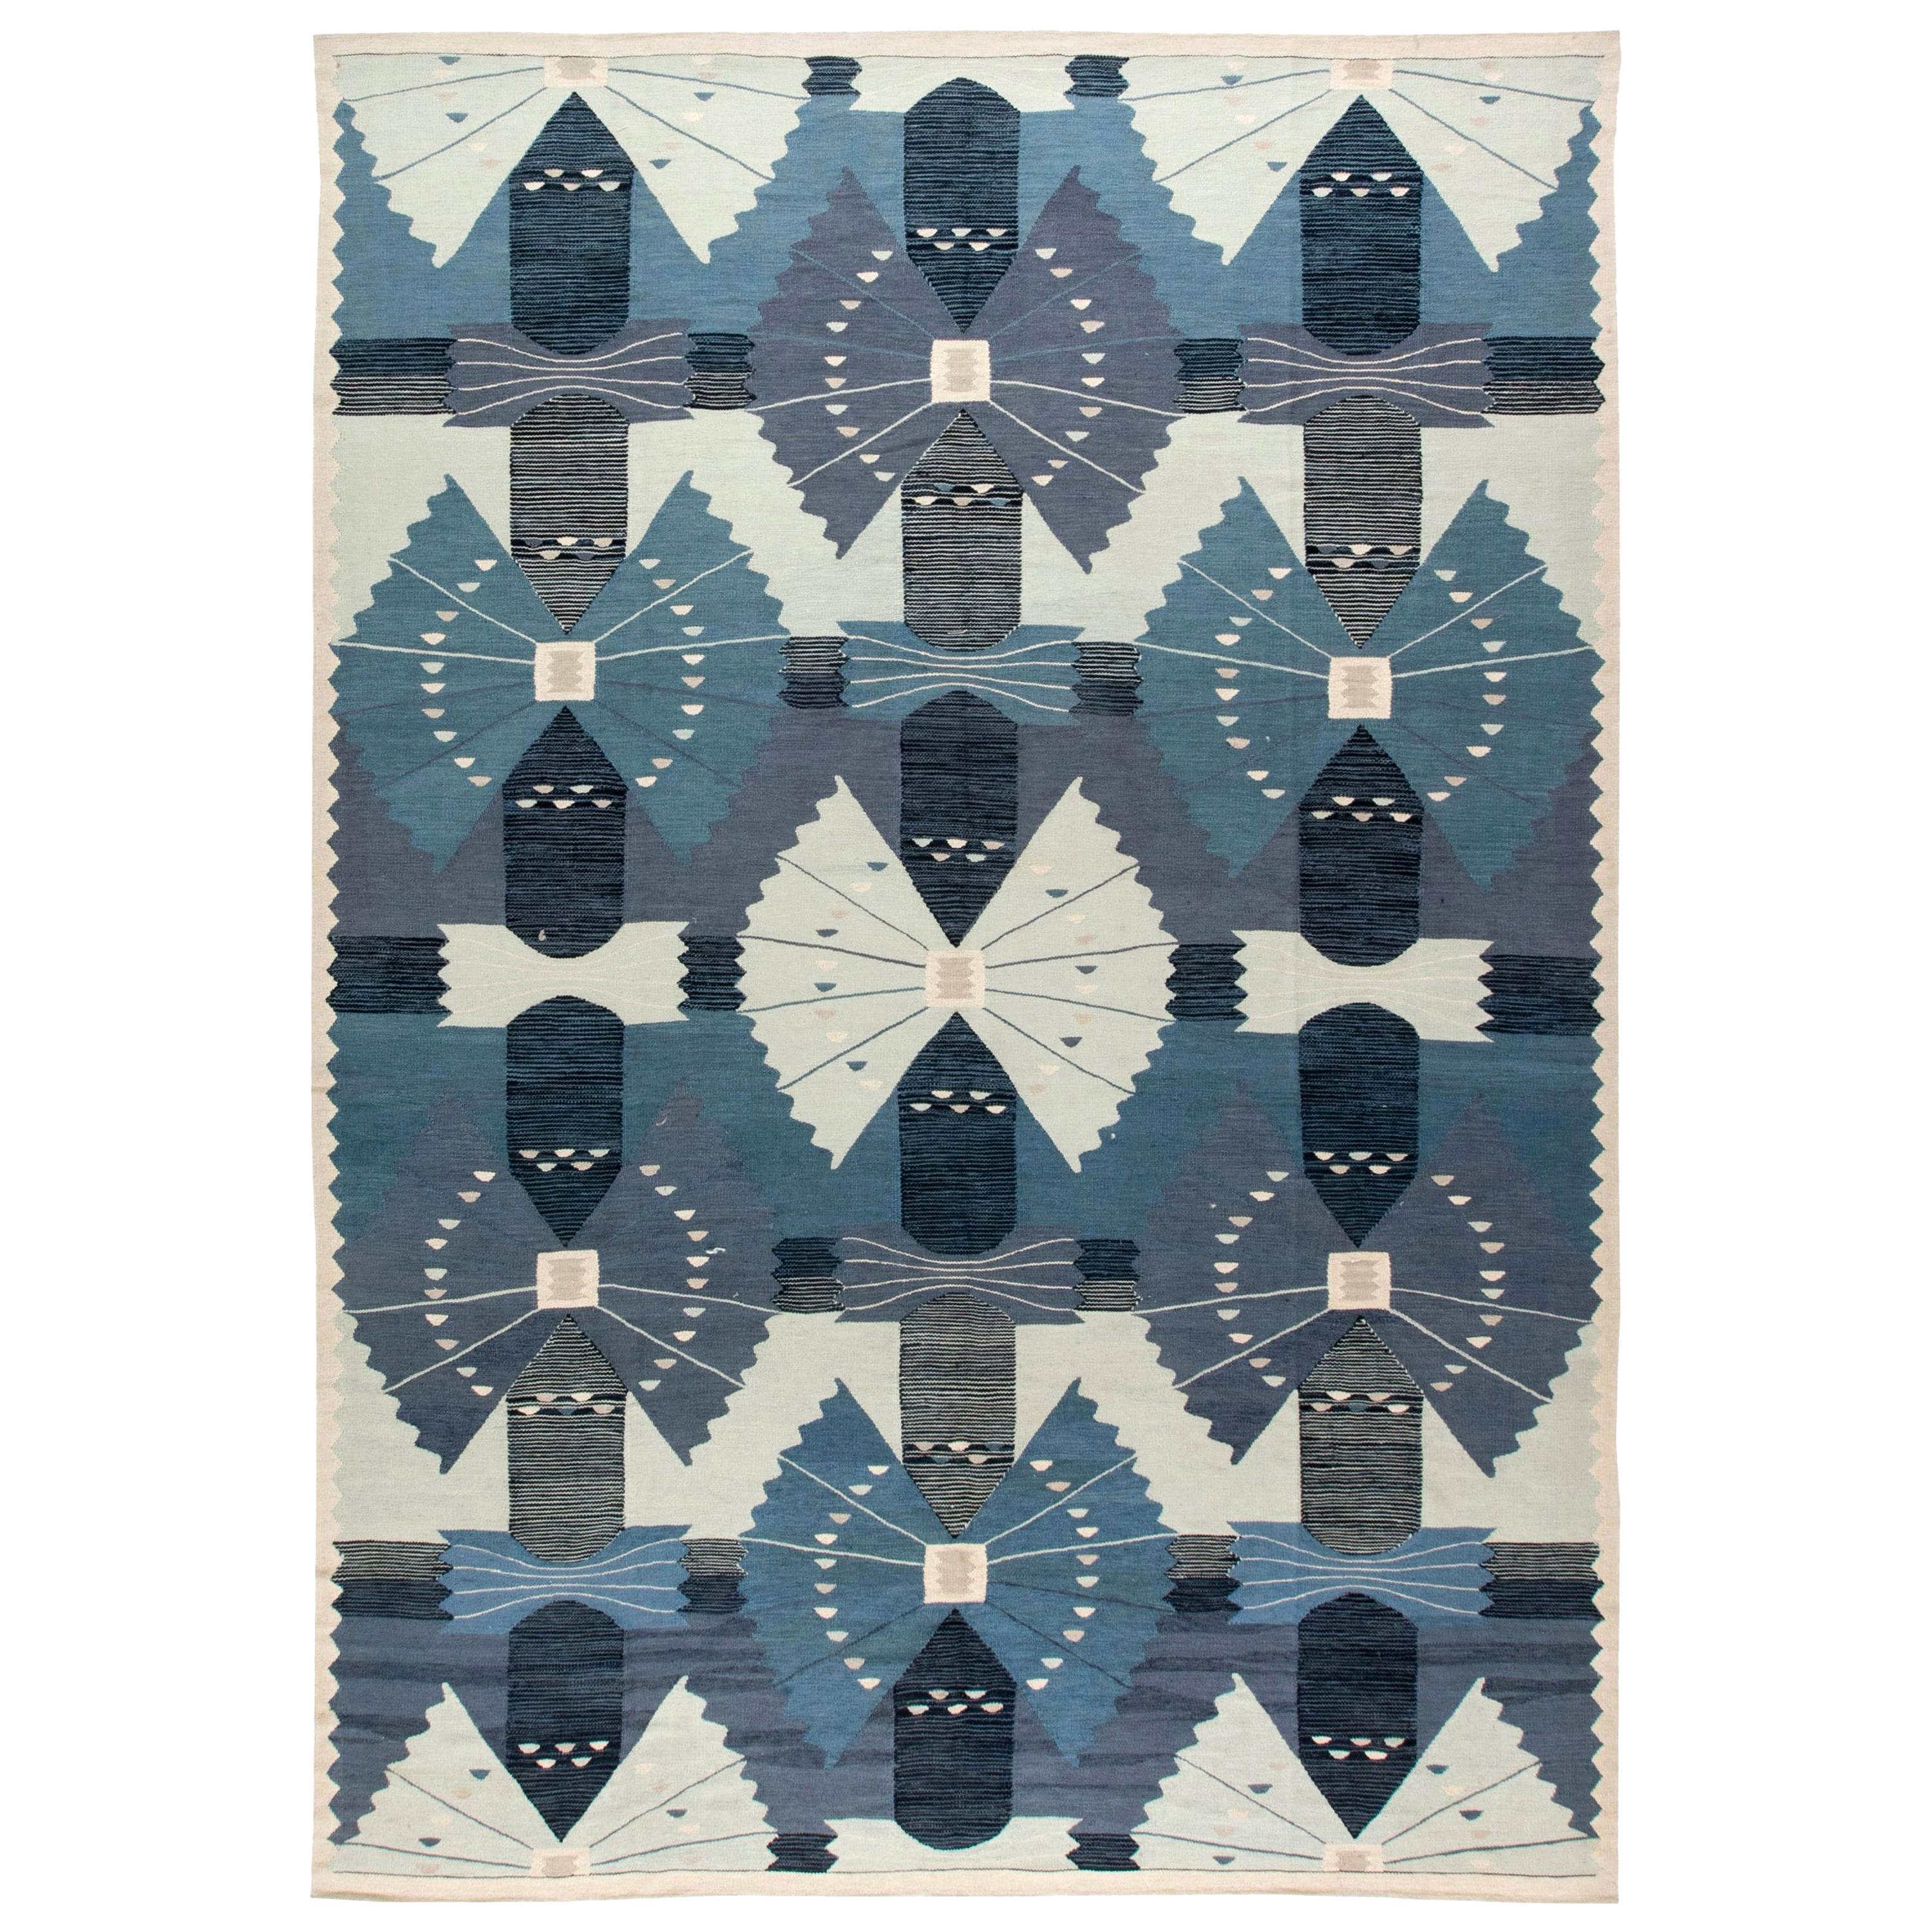 Doris Leslie Blau Collection Swedish Design Blue and White Flat-Woven Wool Rug